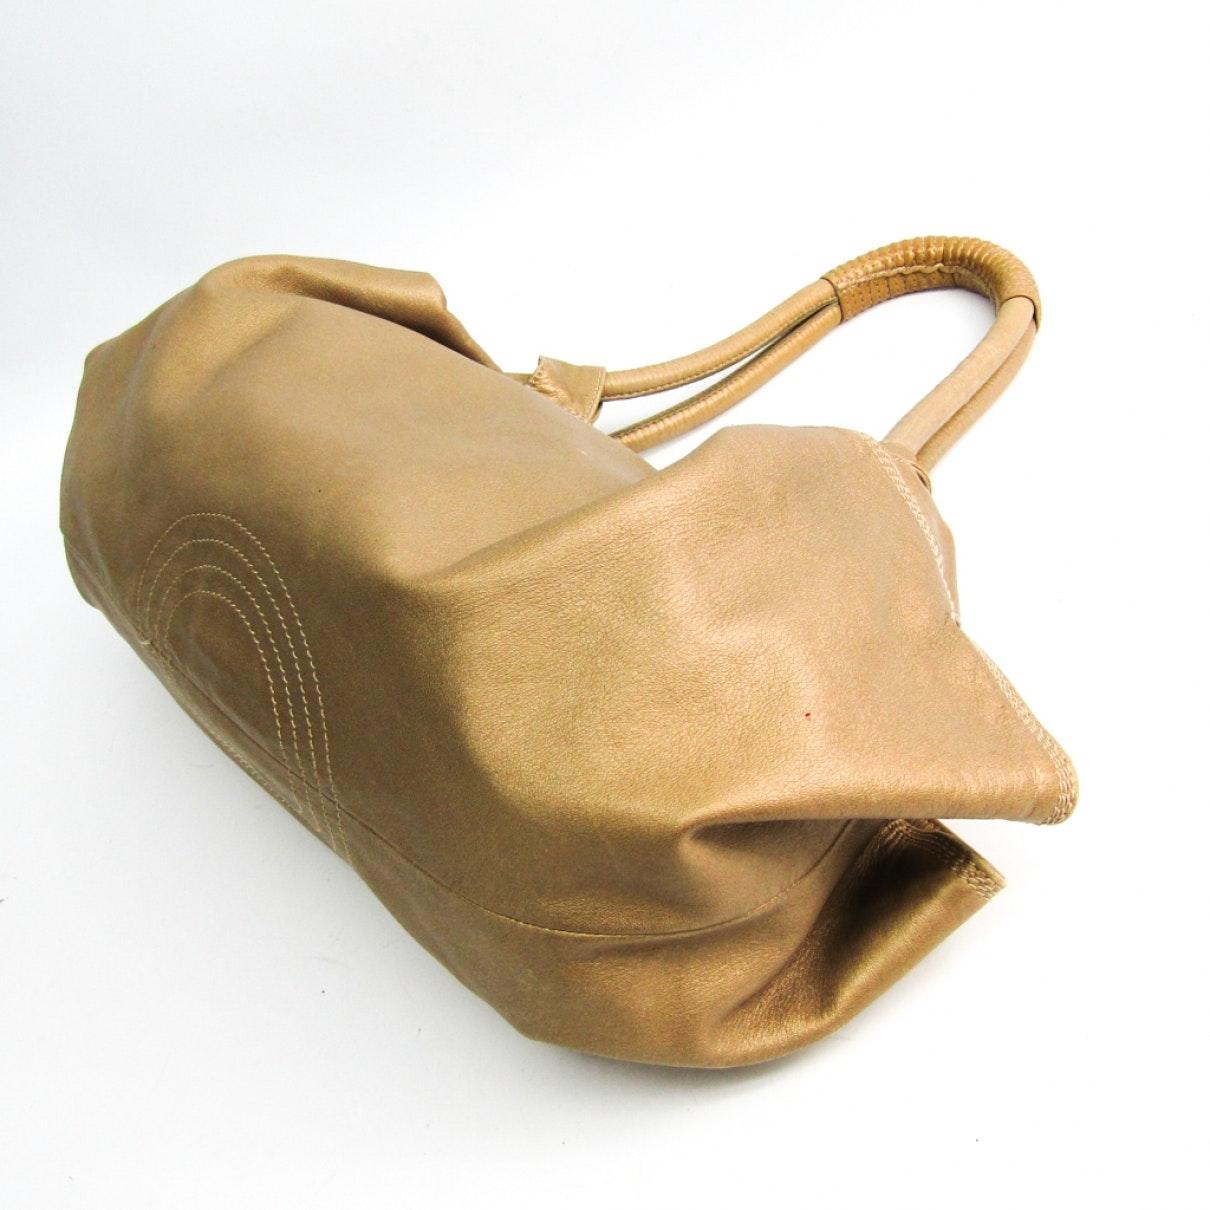 Loewe Leather Handbag in Gold (Metallic) - Lyst